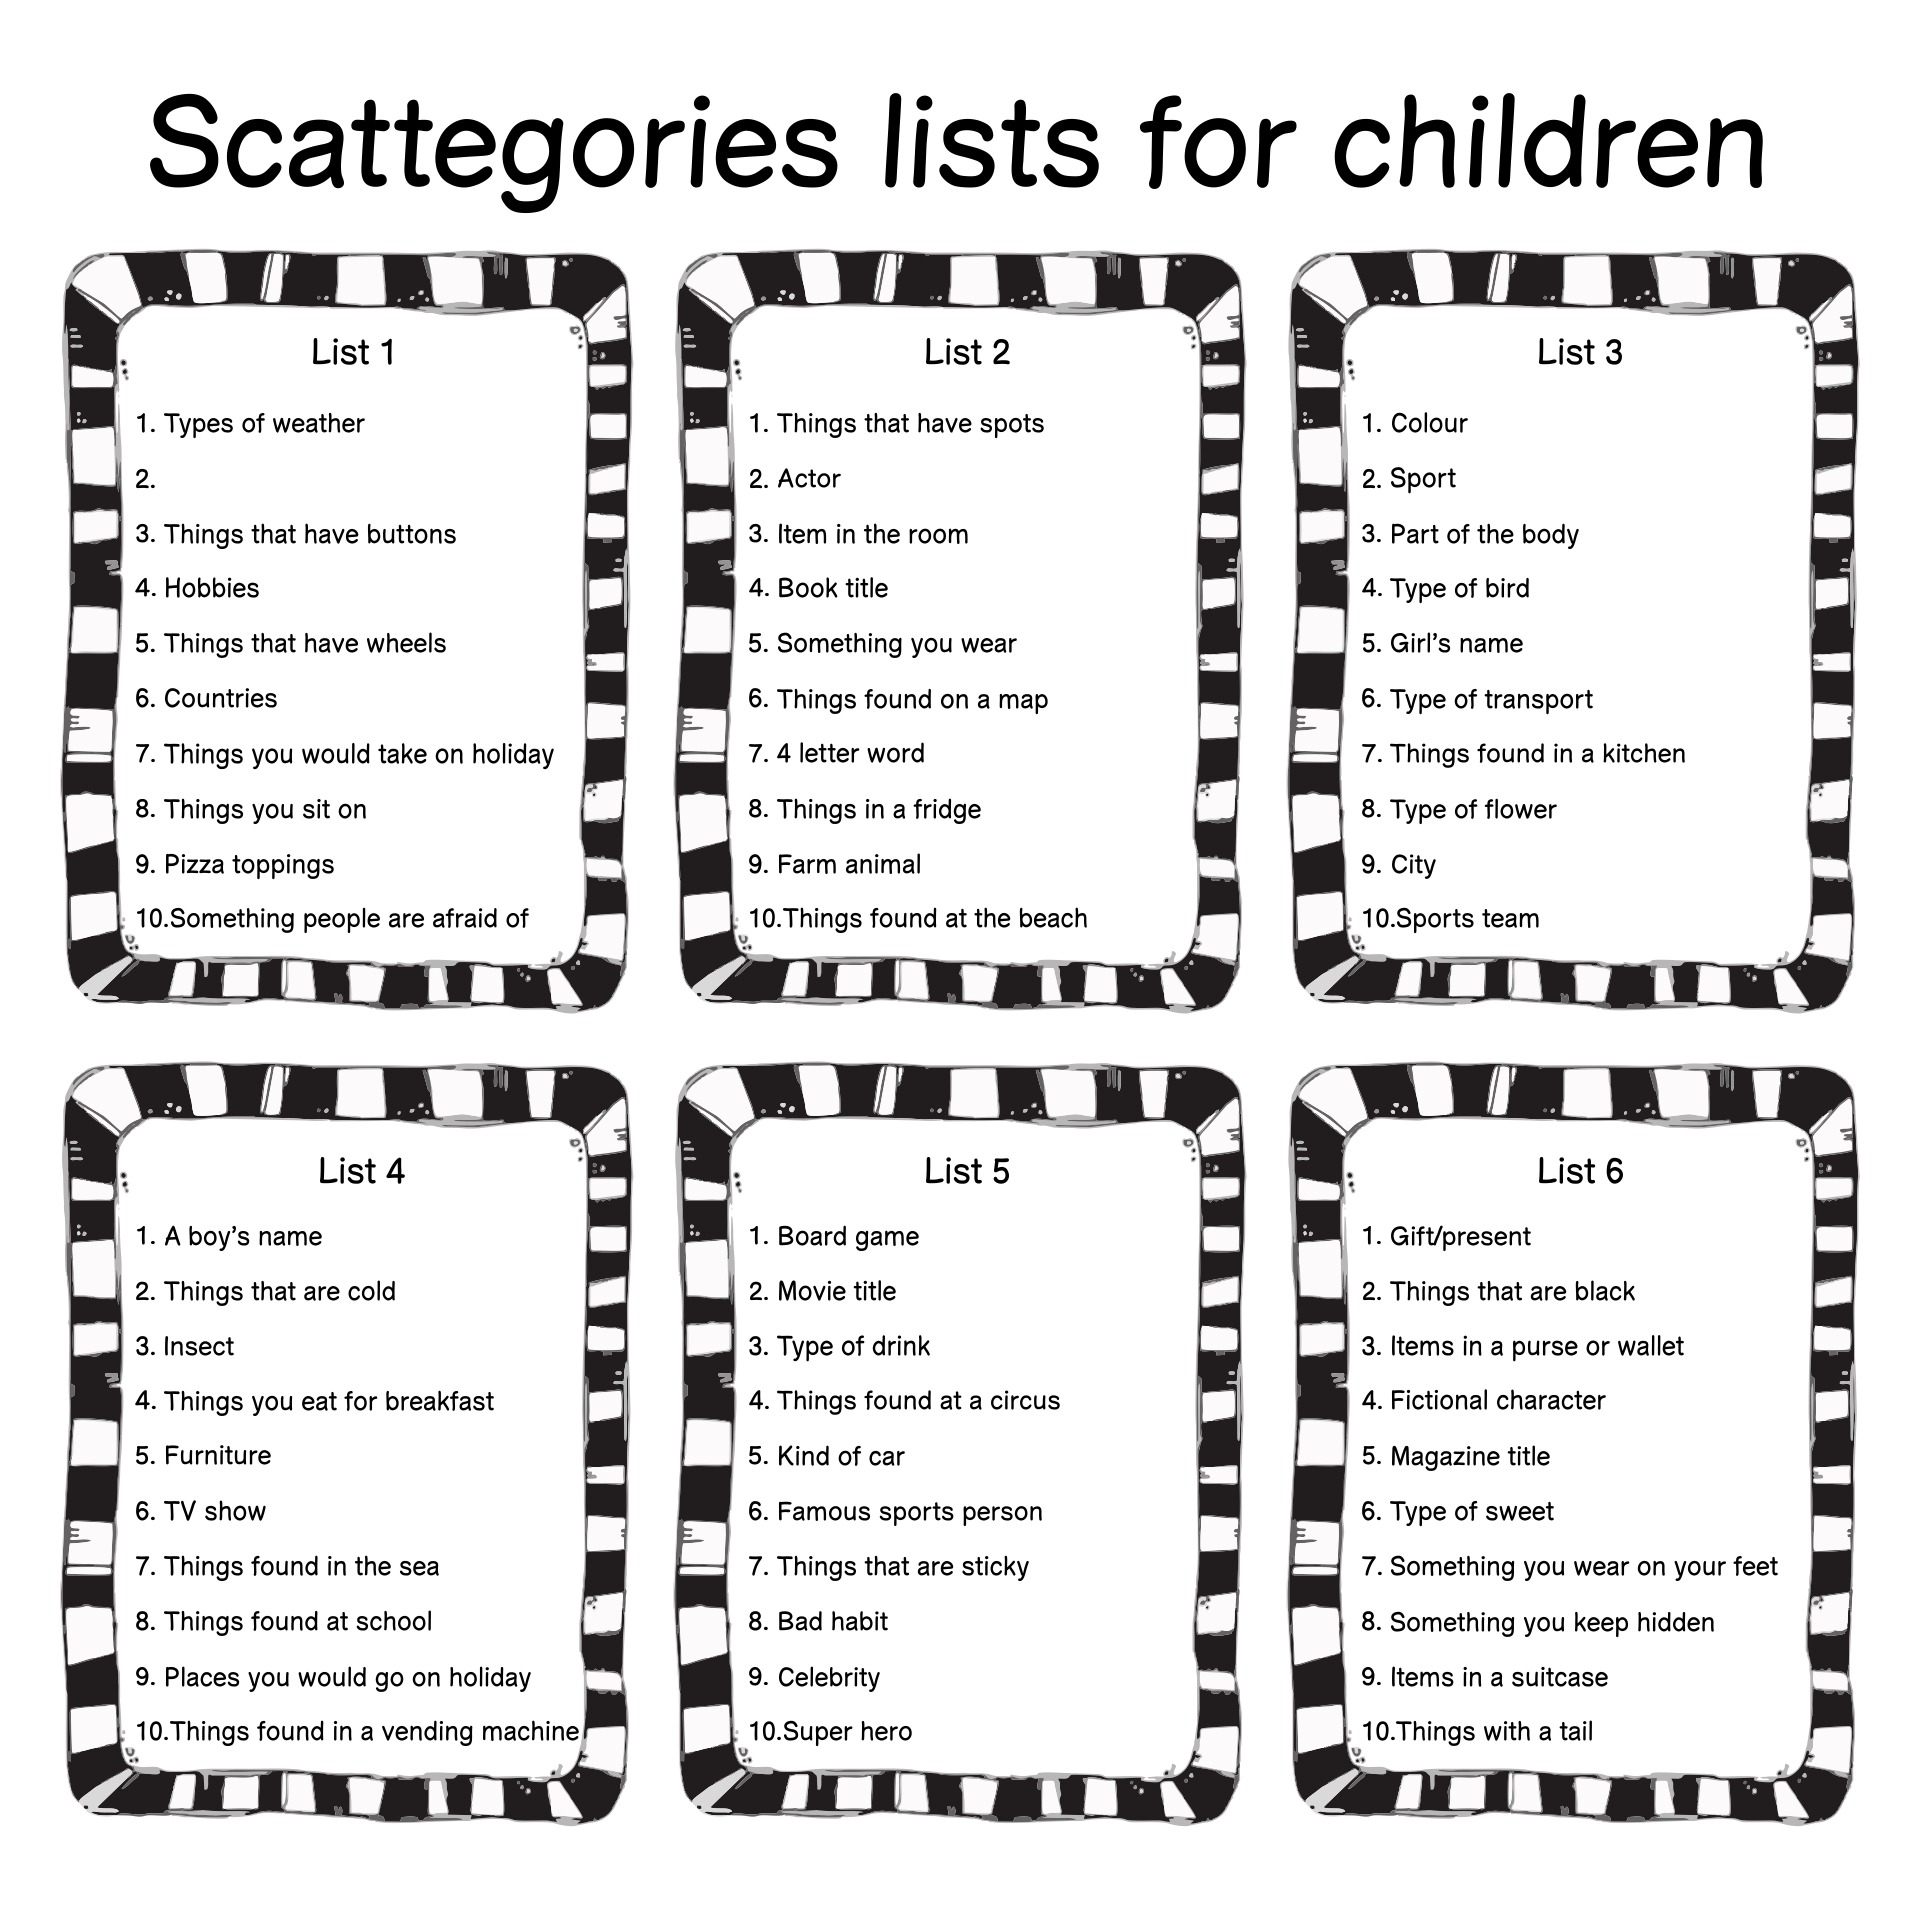 scattergories categories list 1 12